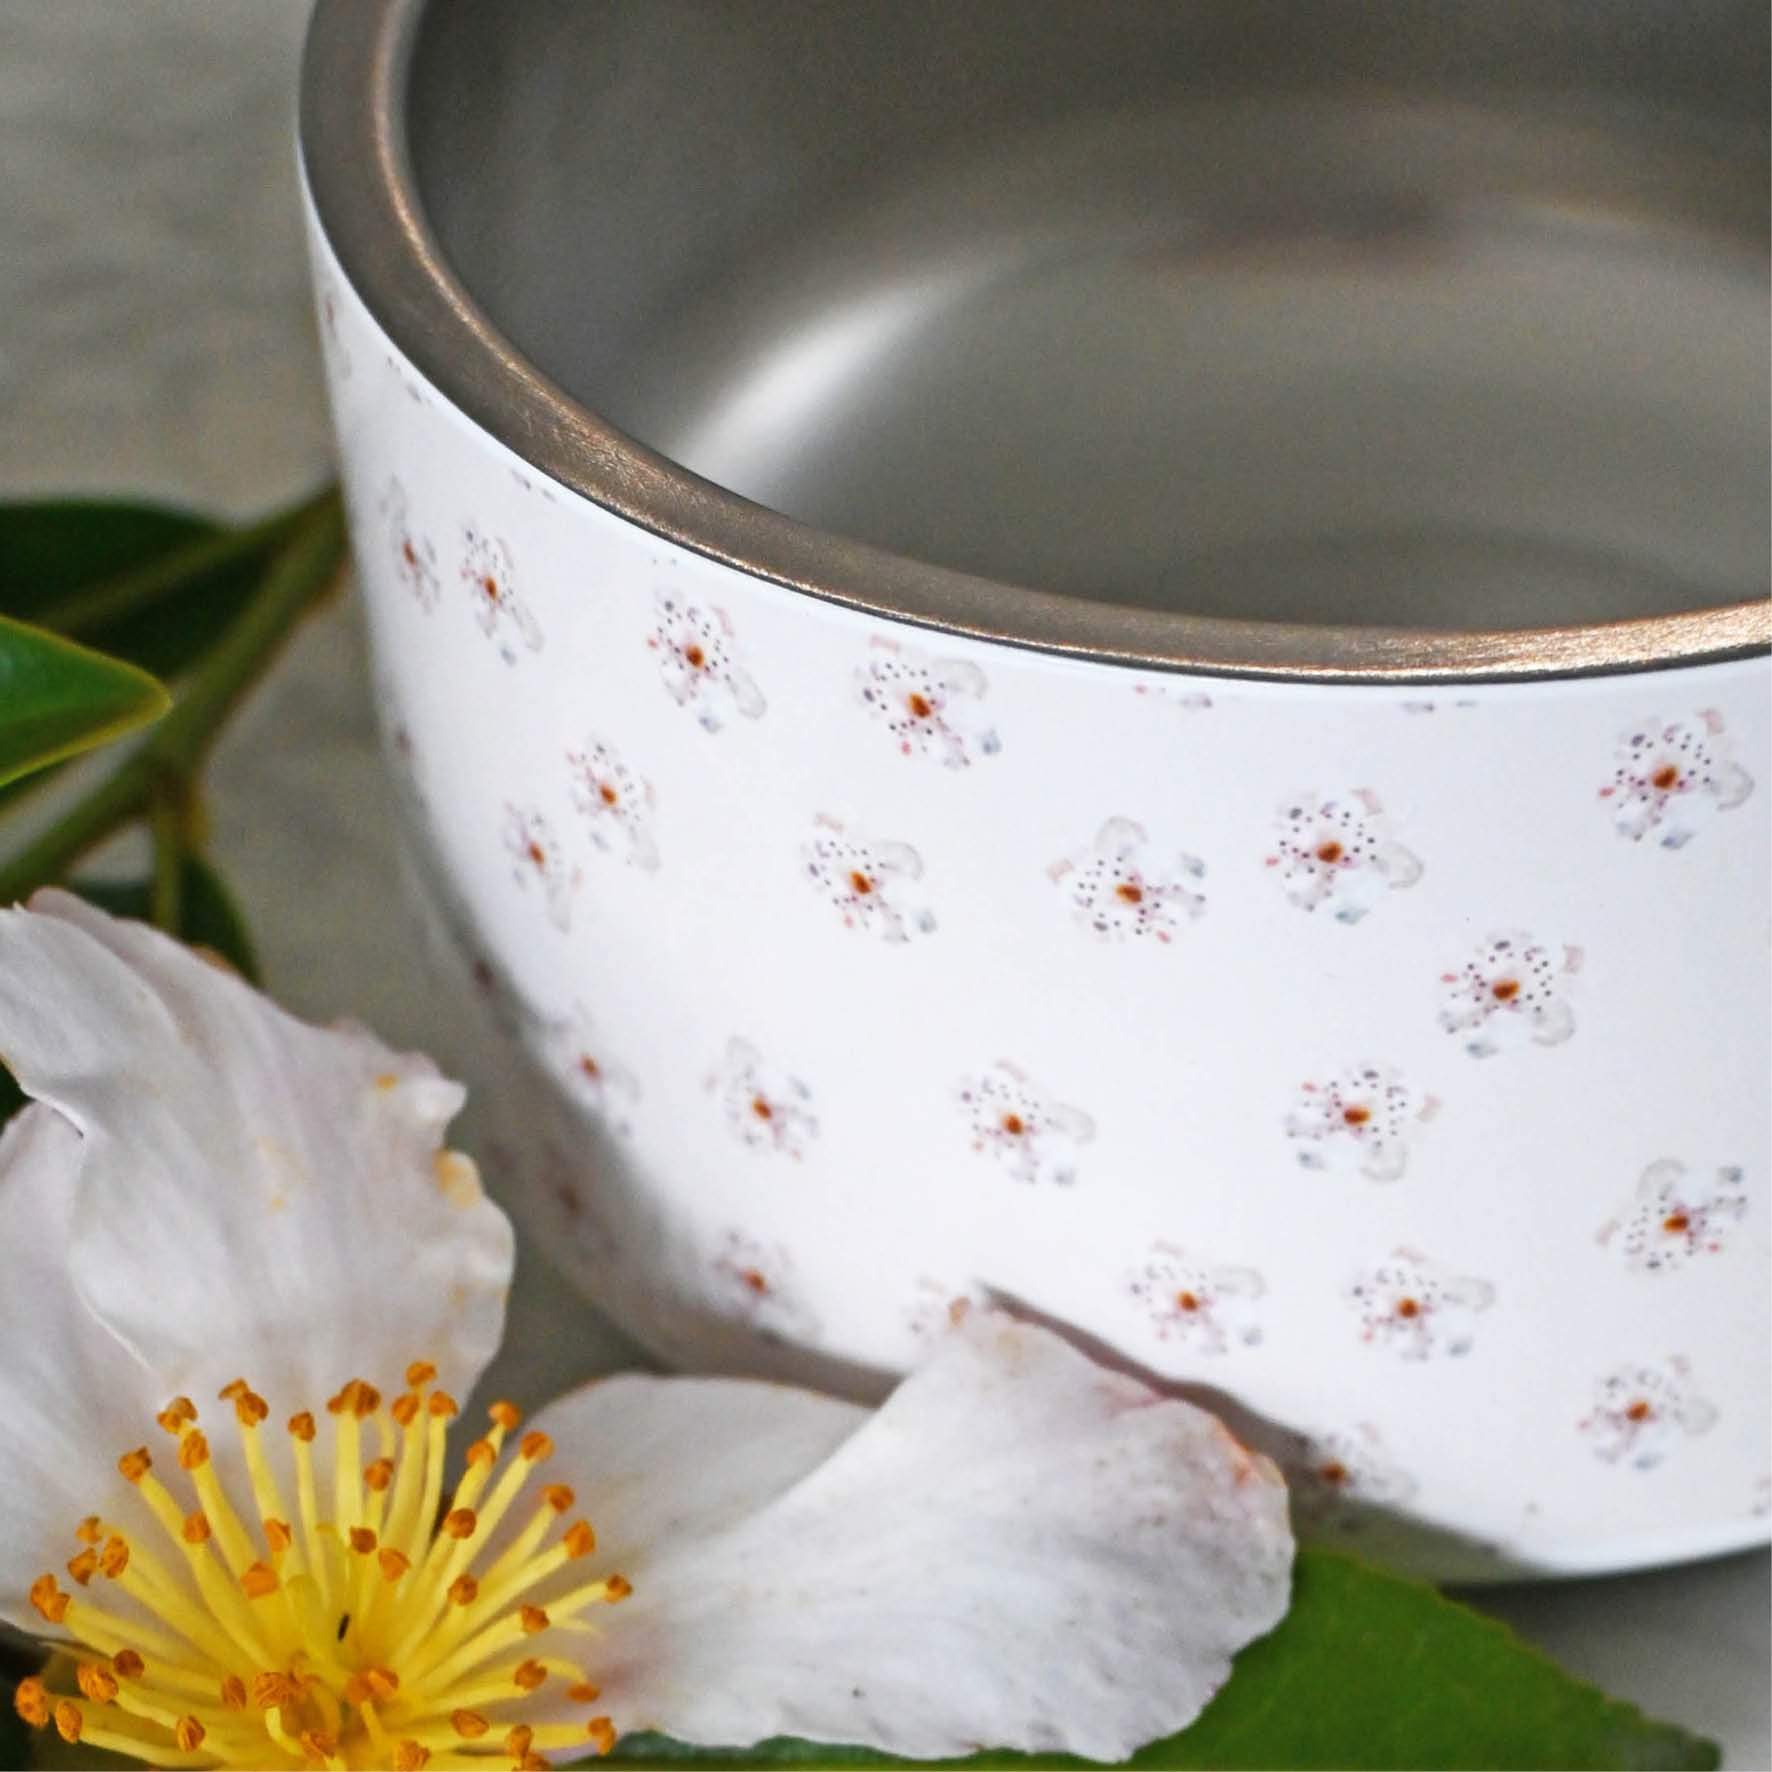 amryn-stainless-steel-floral-dog-bowl.jpg